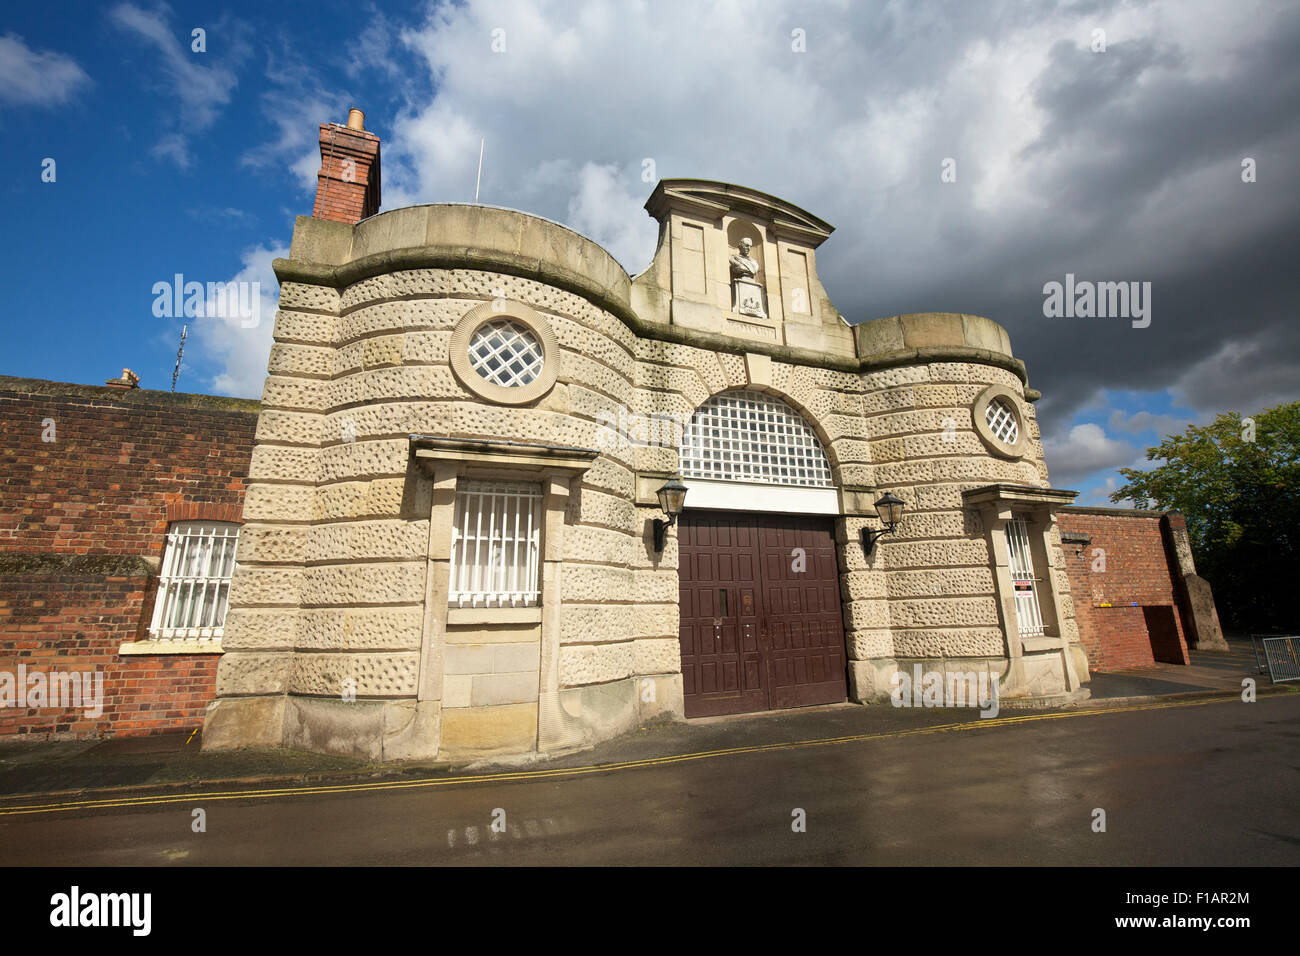 La prison de Shrewsbury Shrewsbury, Shropshire West Midlands England UK Banque D'Images